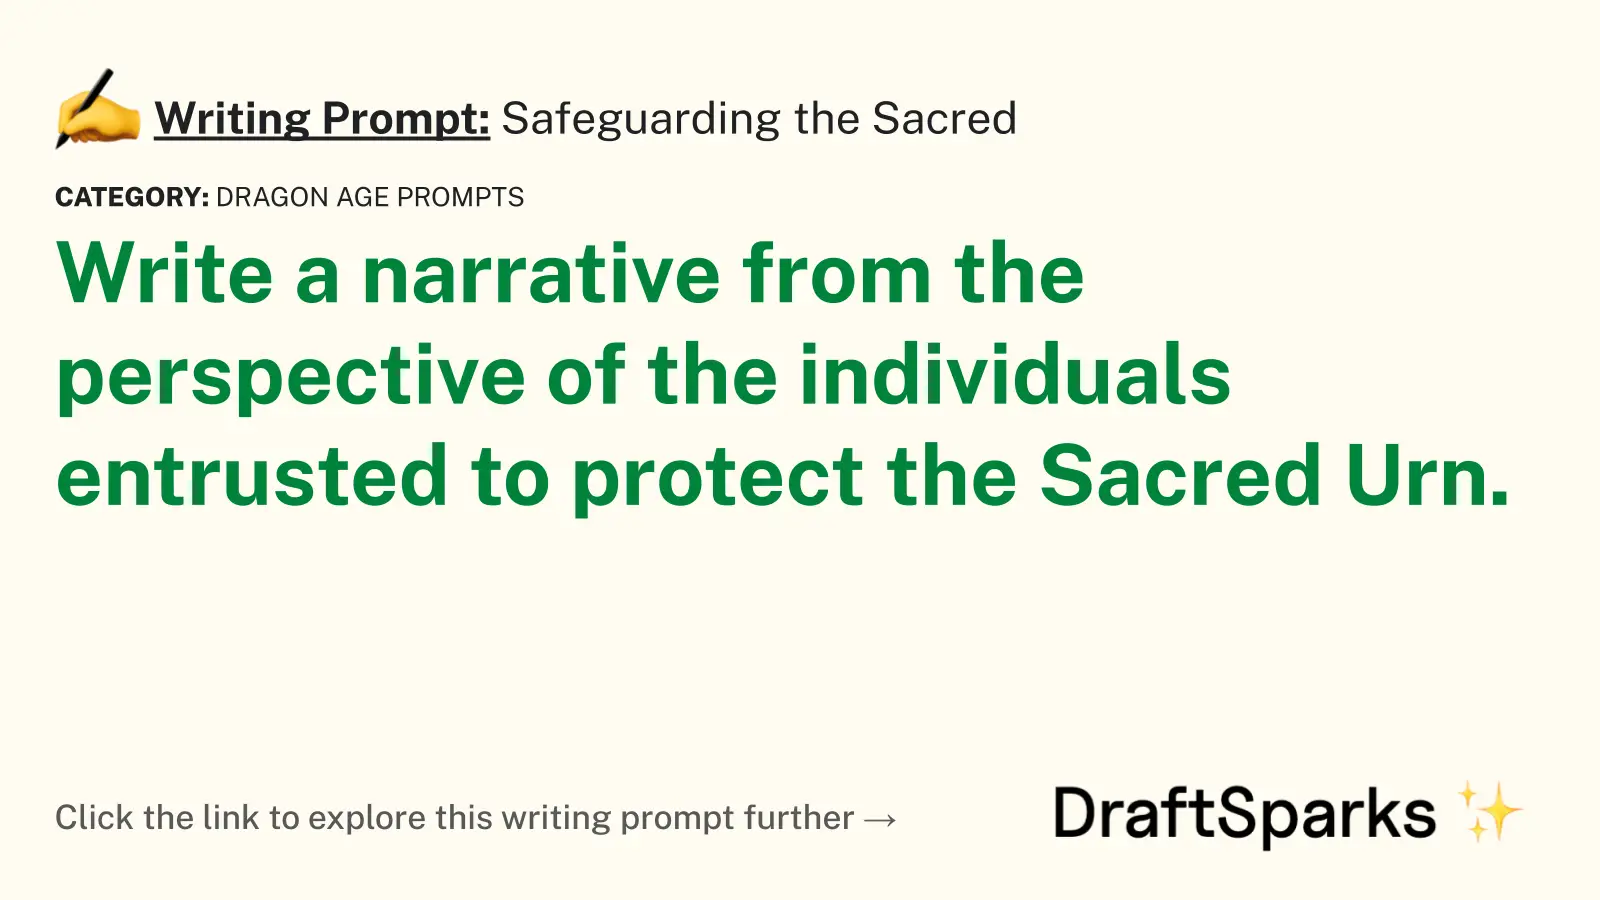 Safeguarding the Sacred